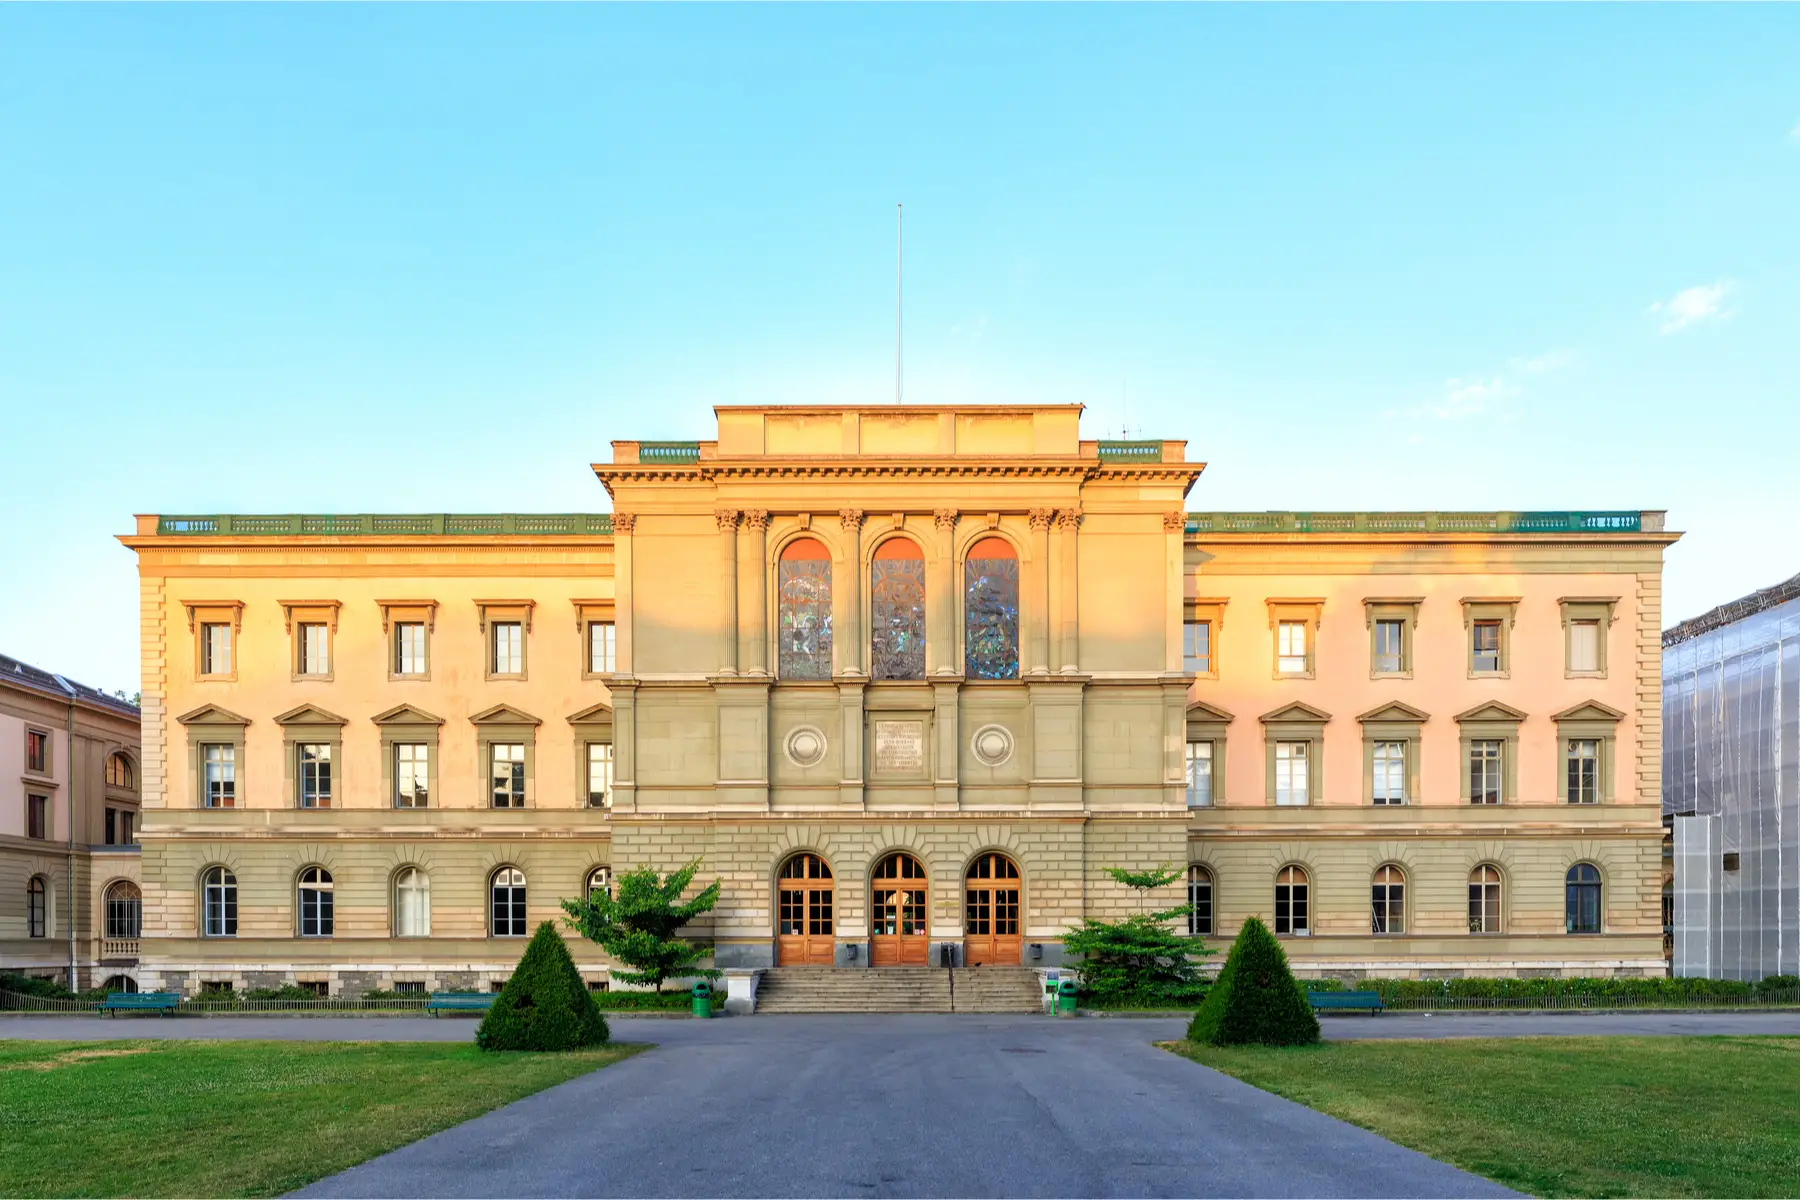 University of Geneva library